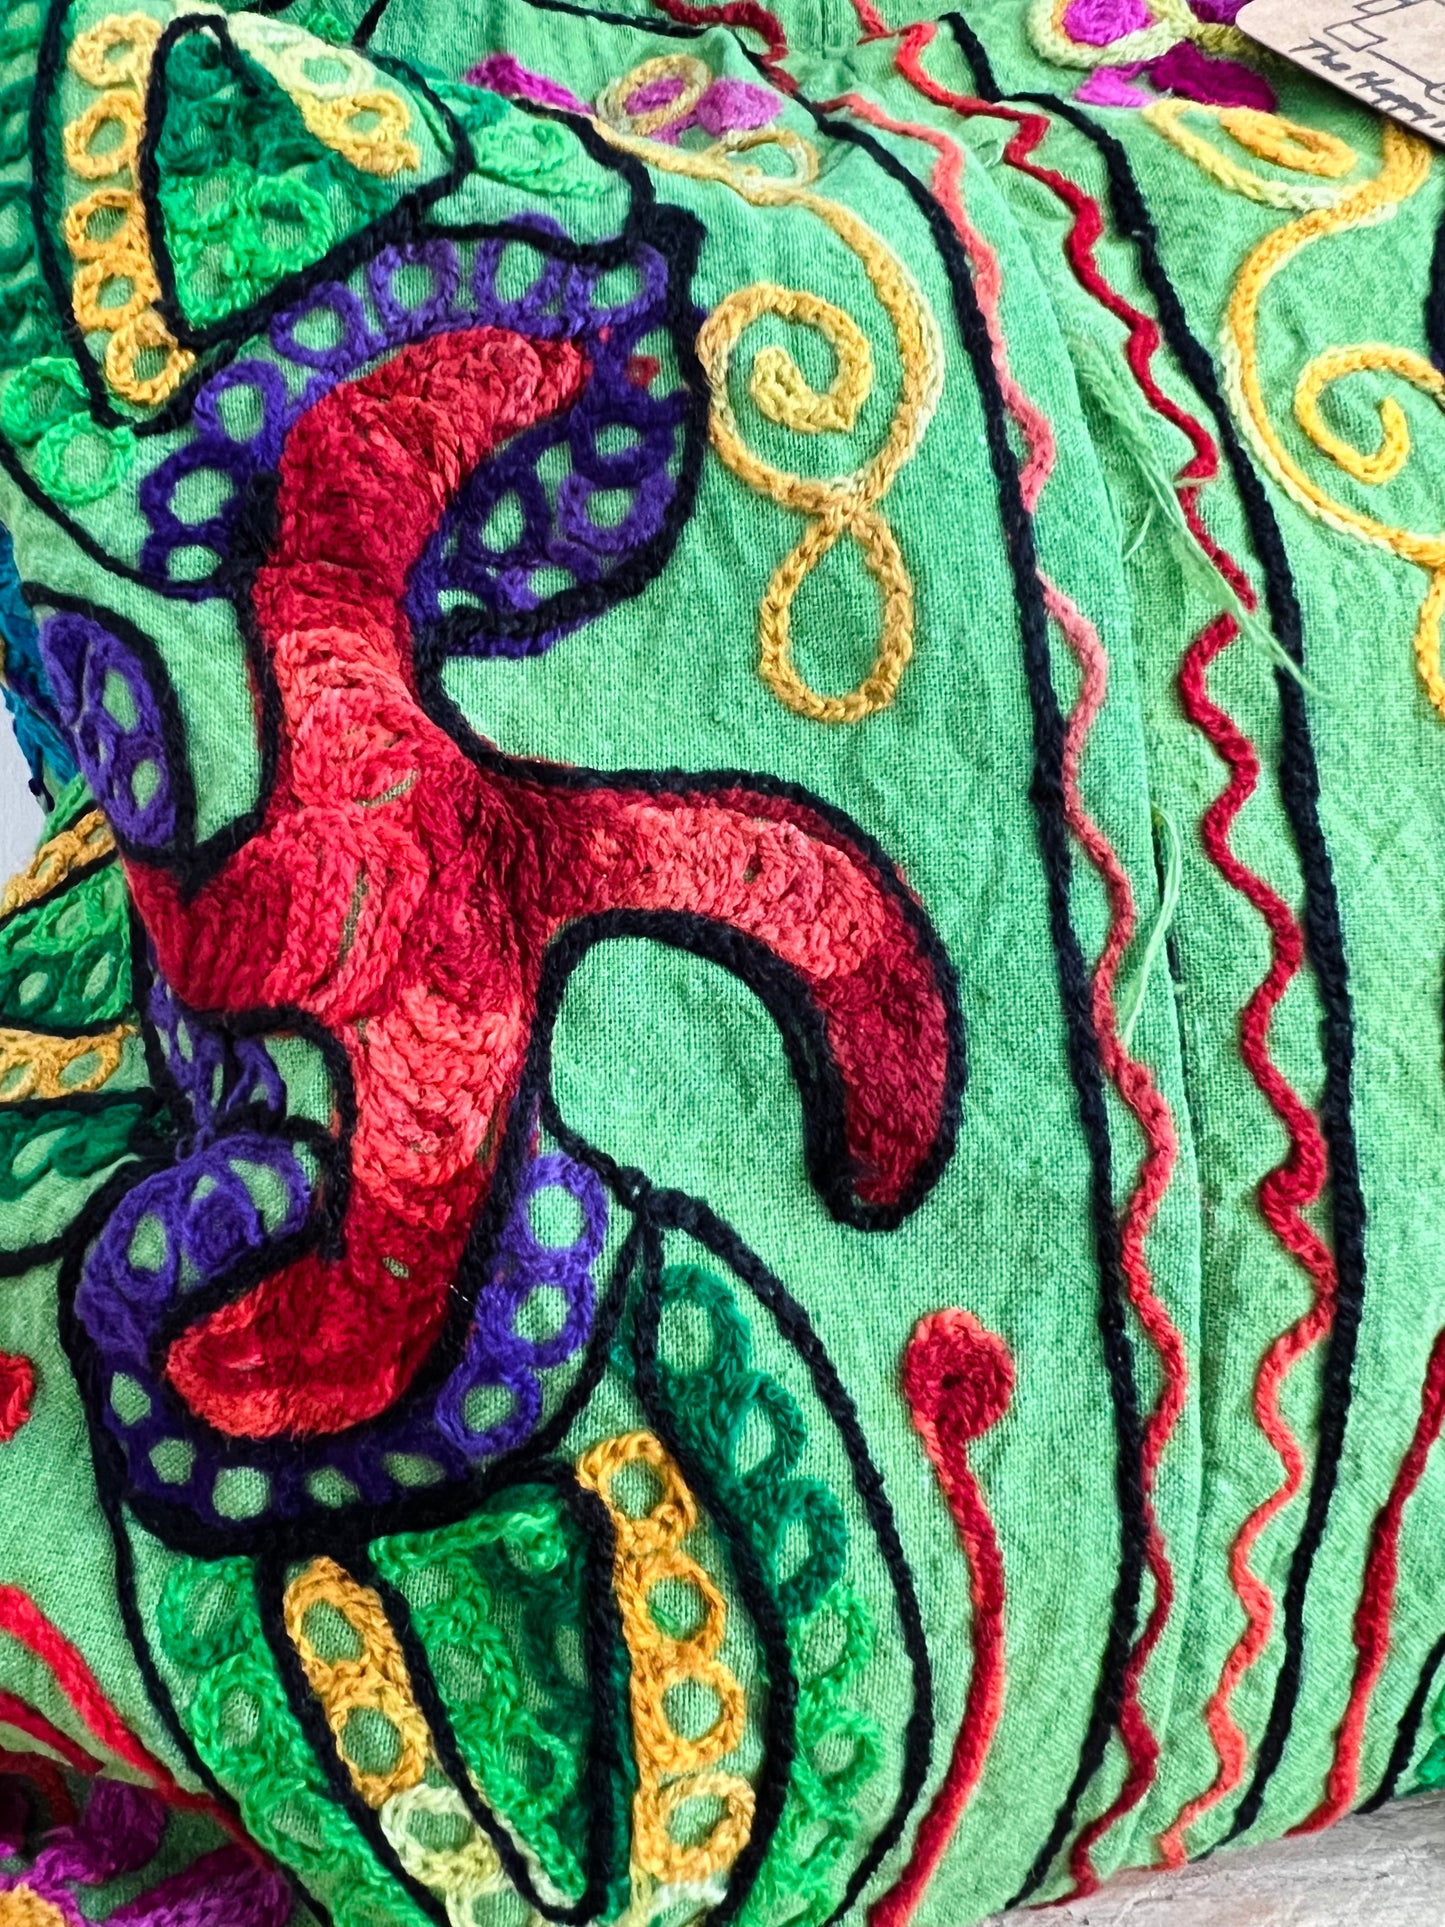 Handmade, Fair Trade, Embroidered, Indian, Elephant, Hippie, Bohemian Shoulder Bag, Green